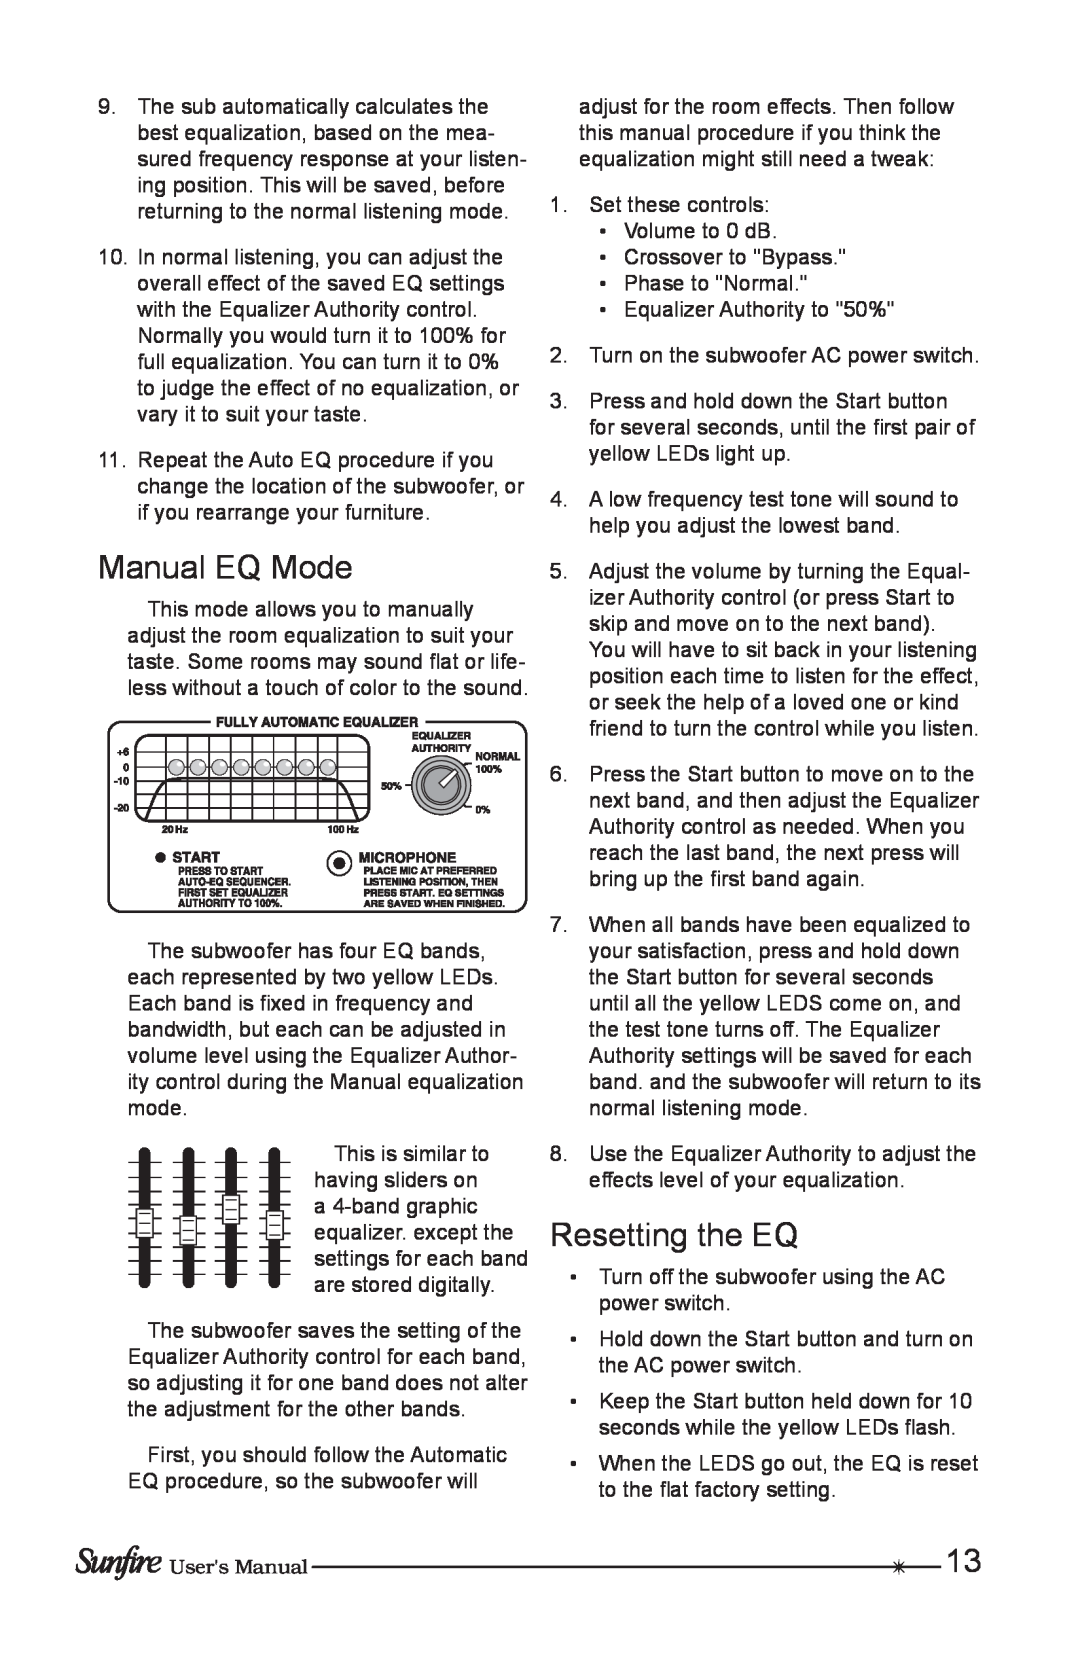 Sunfire Solitaire 10 user manual Manual EQ Mode, Resetting the EQ 